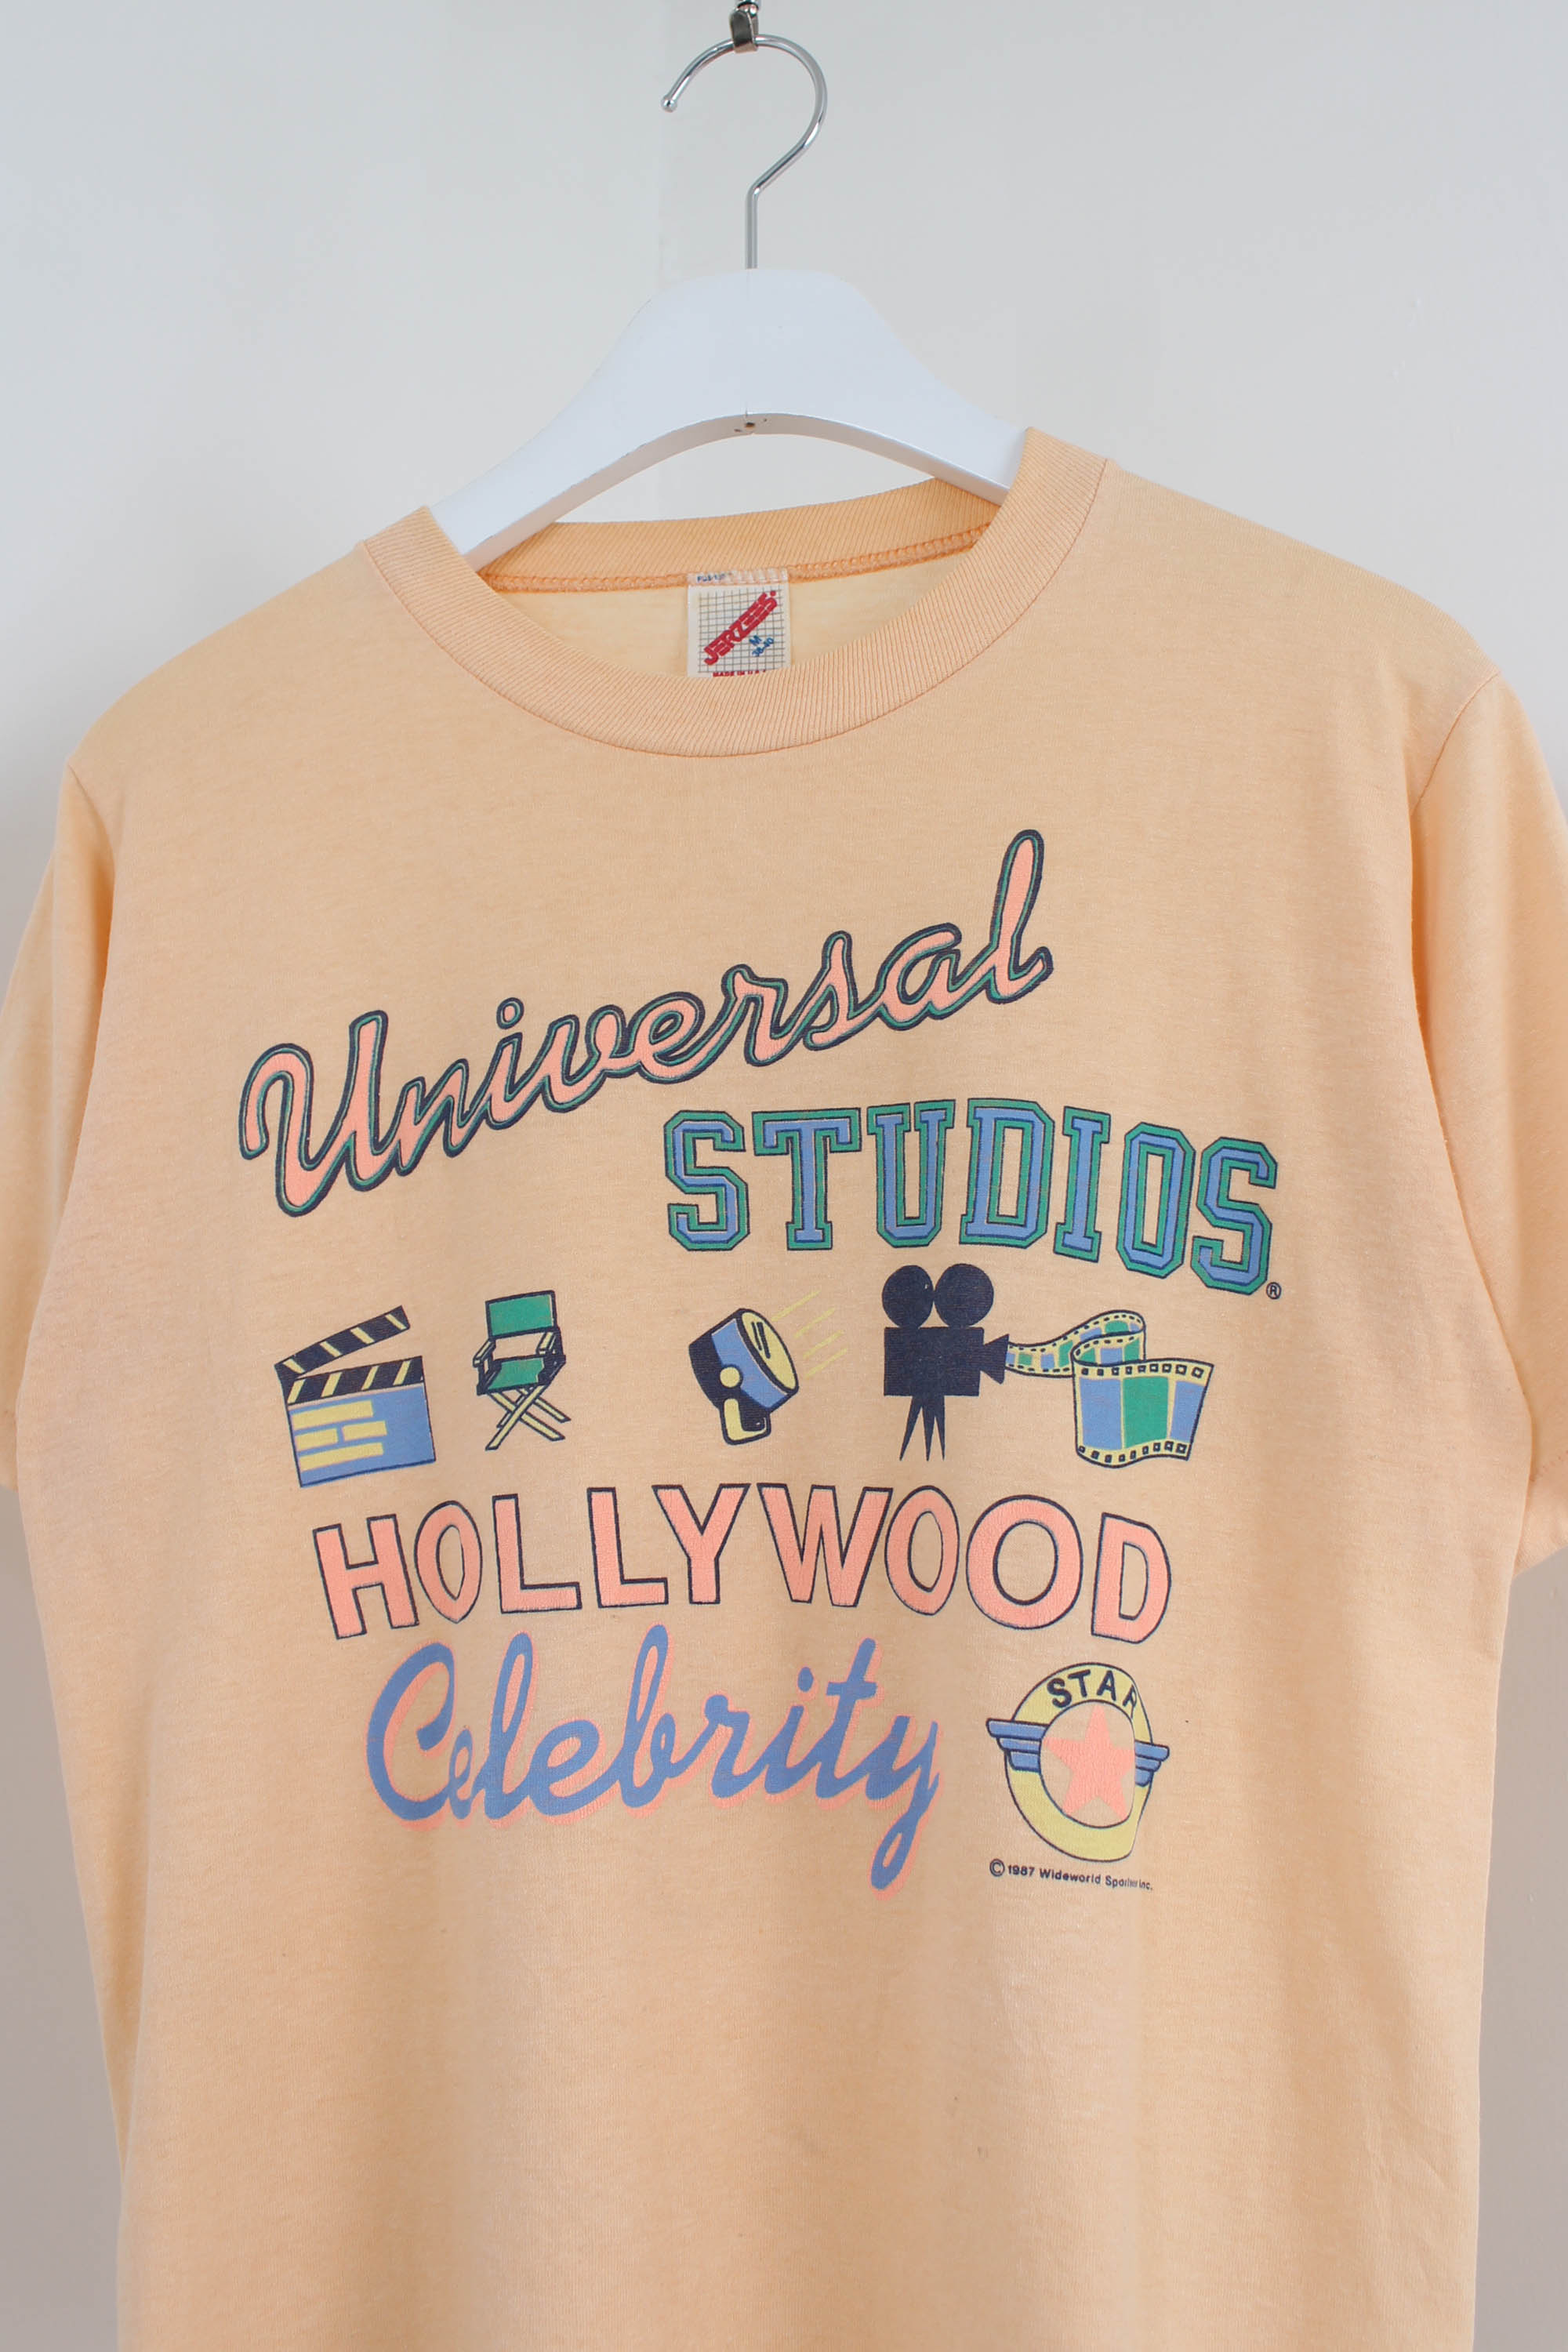 1980s jerzees &quot;Universal Studios Hollywood Celebrity&quot; t-shirt